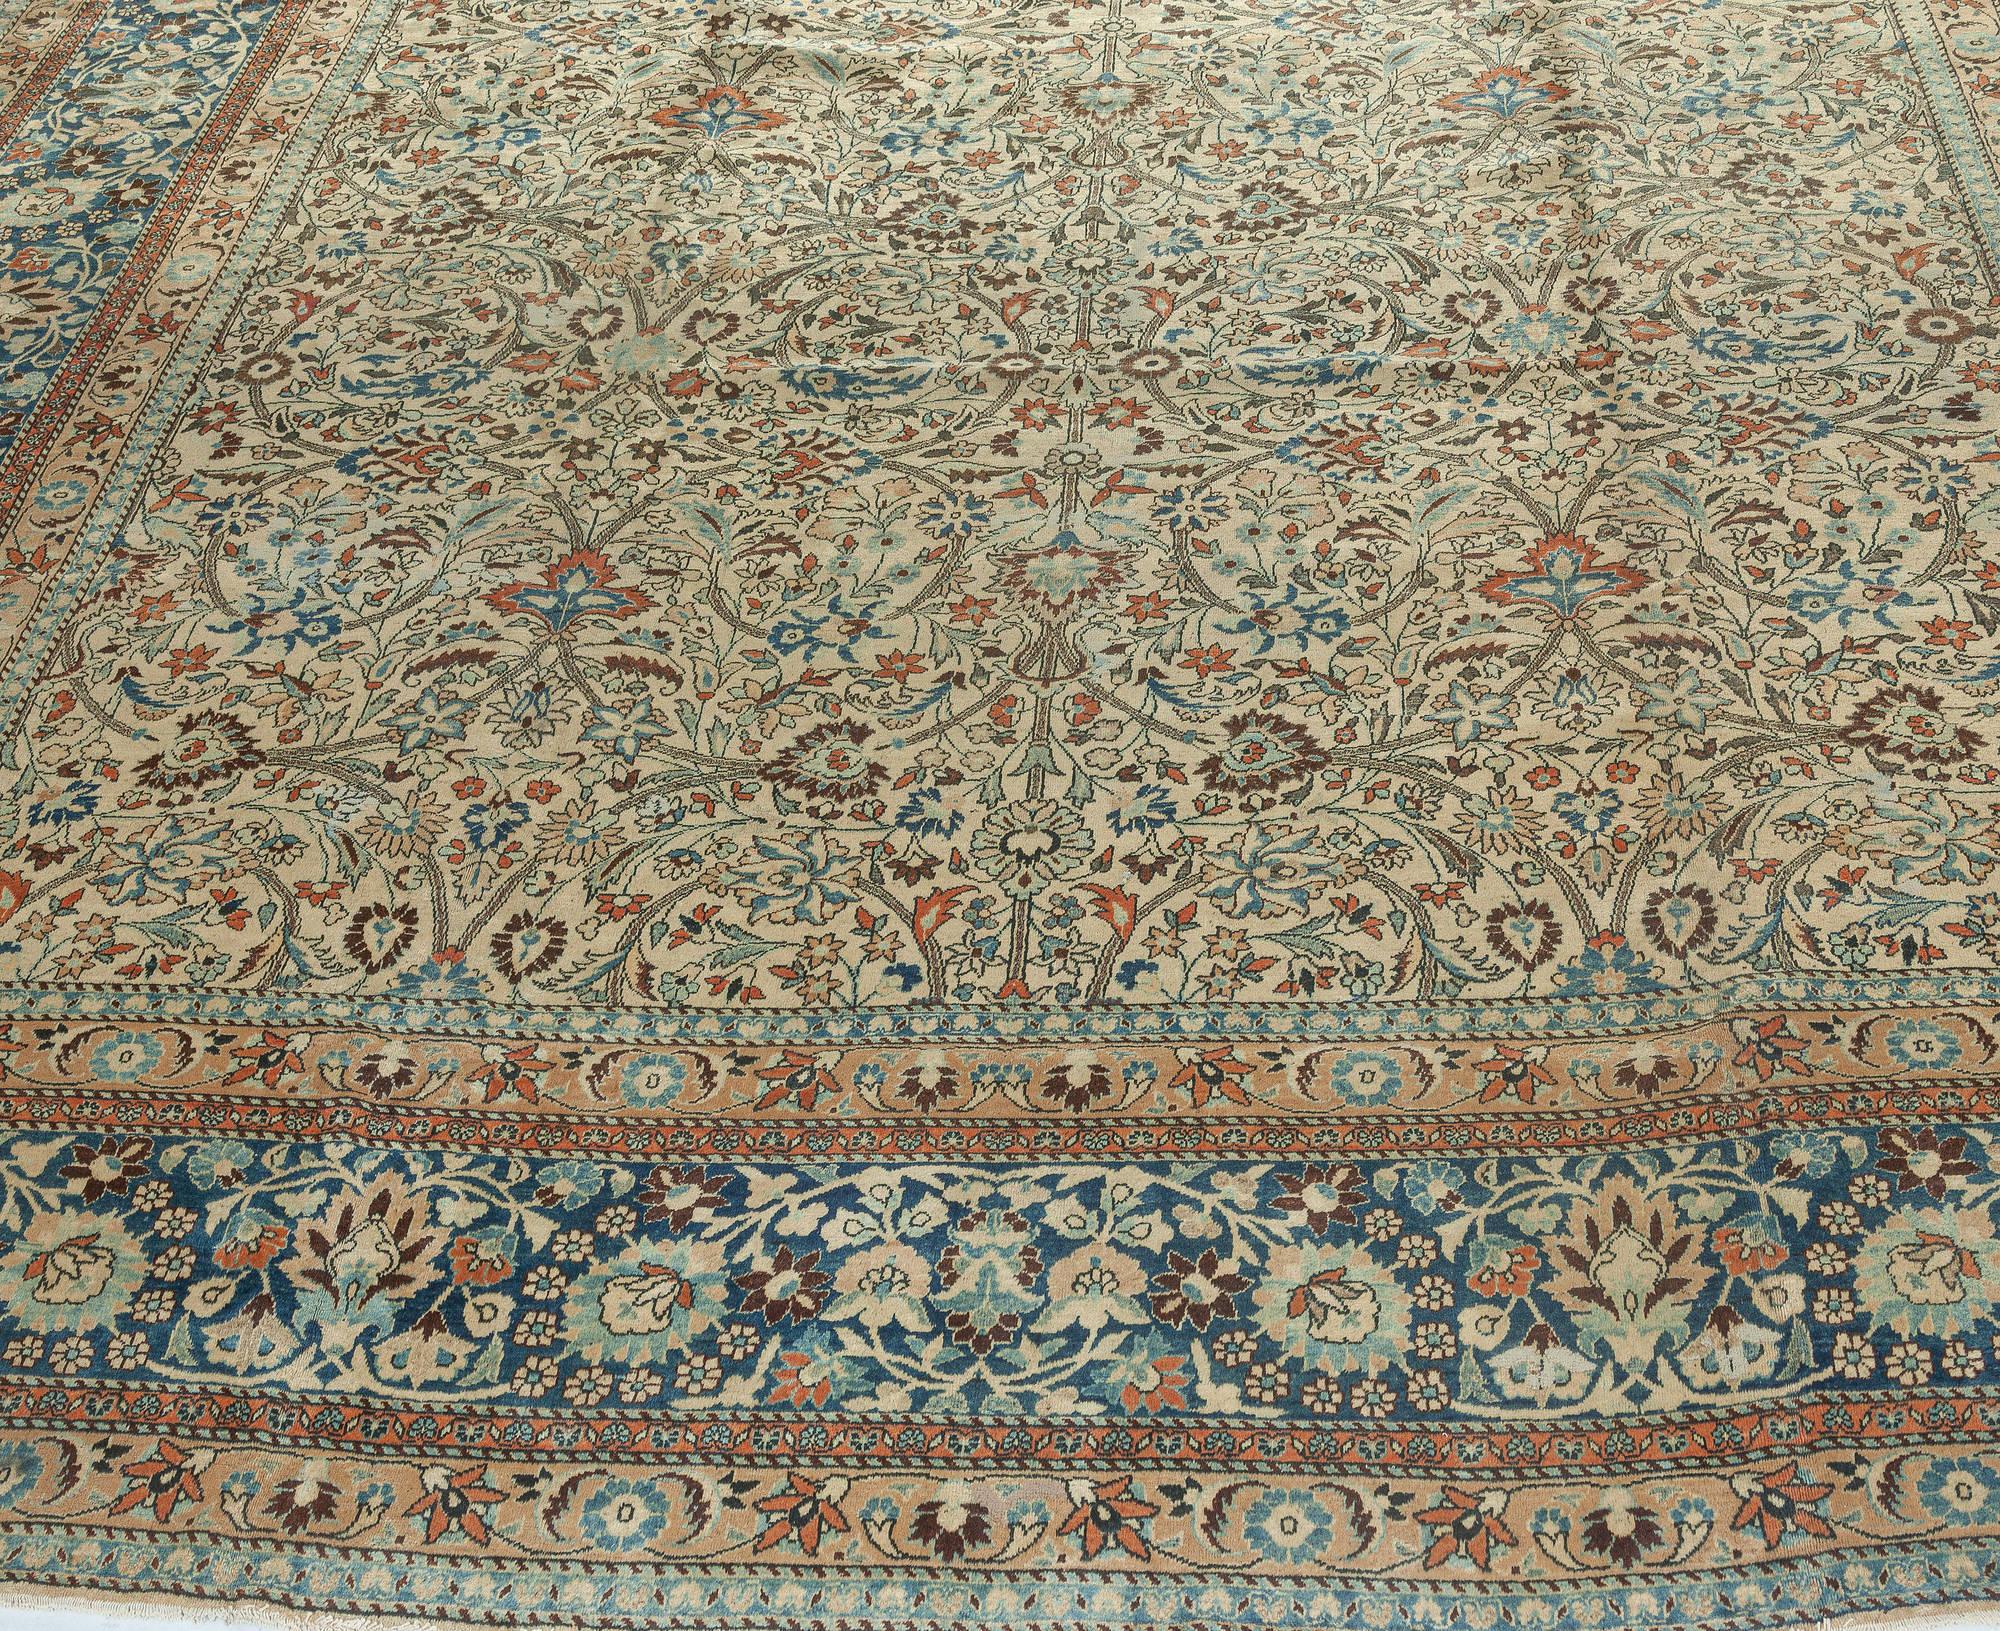 Antique Persian Khorassan Botanic Handmade Wool Rug
Size: 13'1